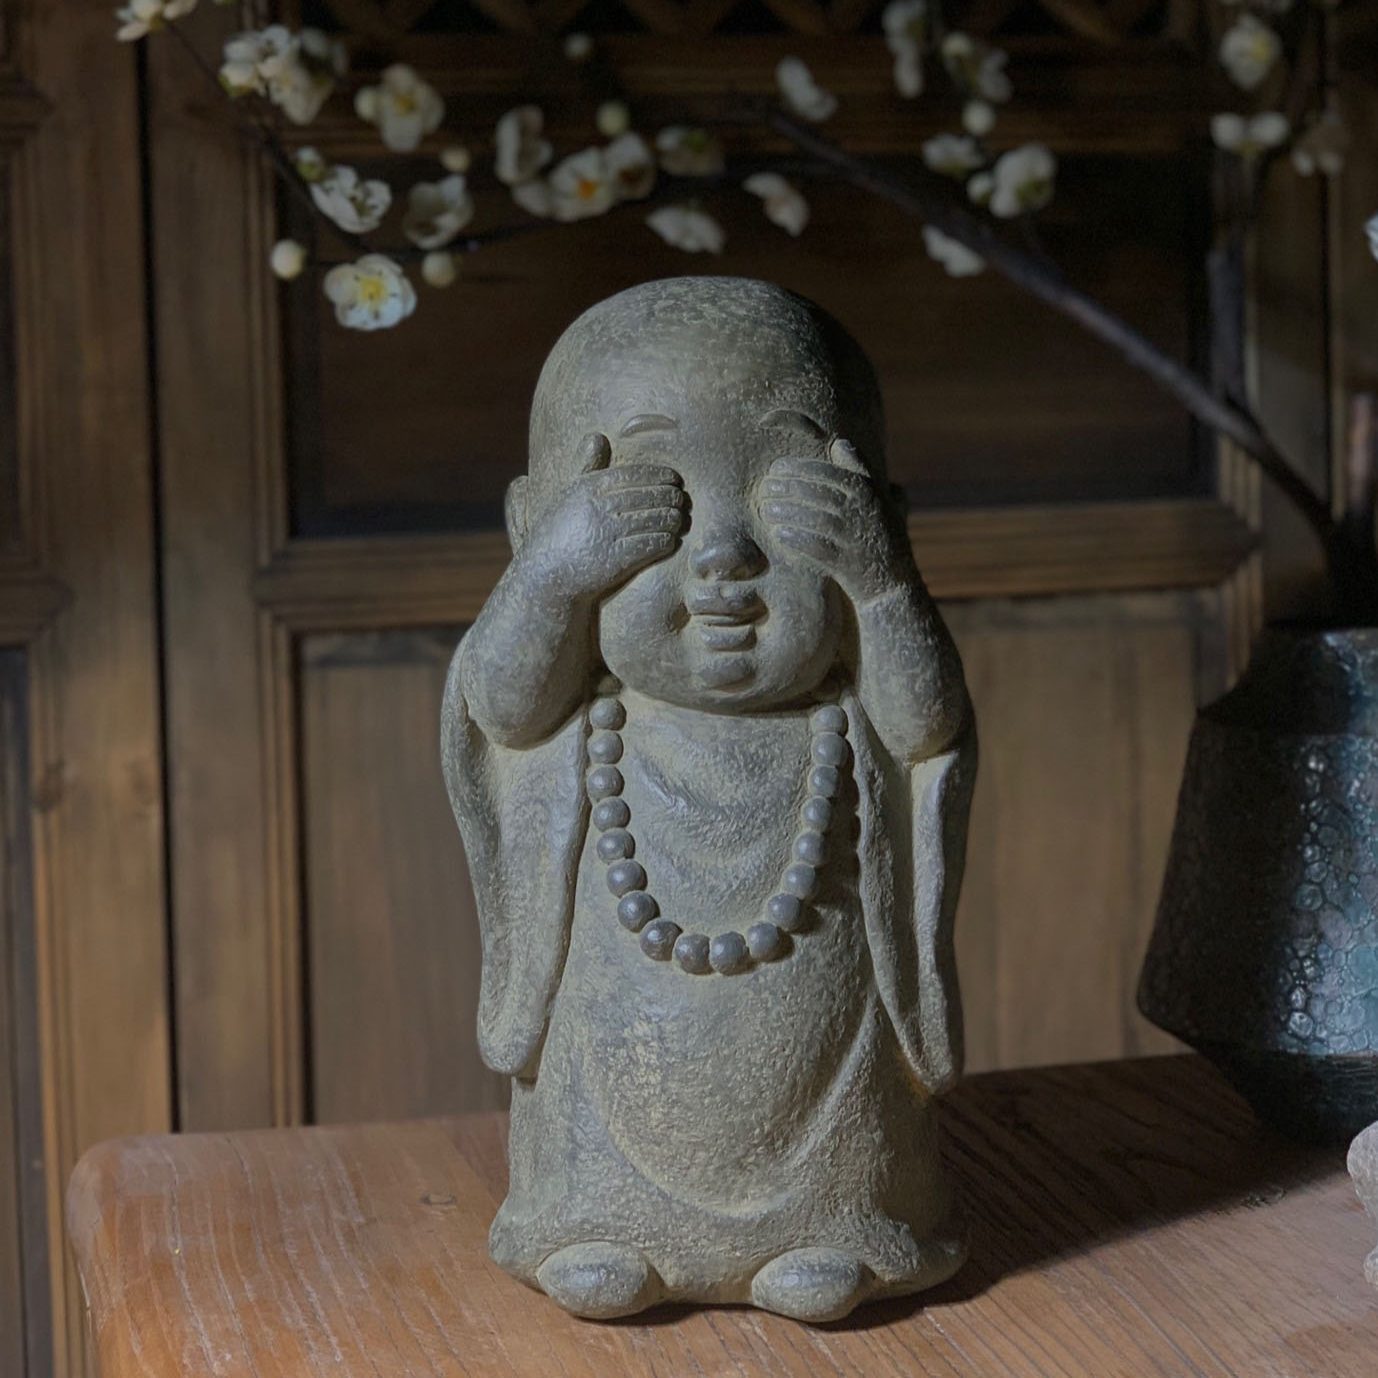 Little Novice Monk,Handcraft, Stone Carving Art, Home Interior Design